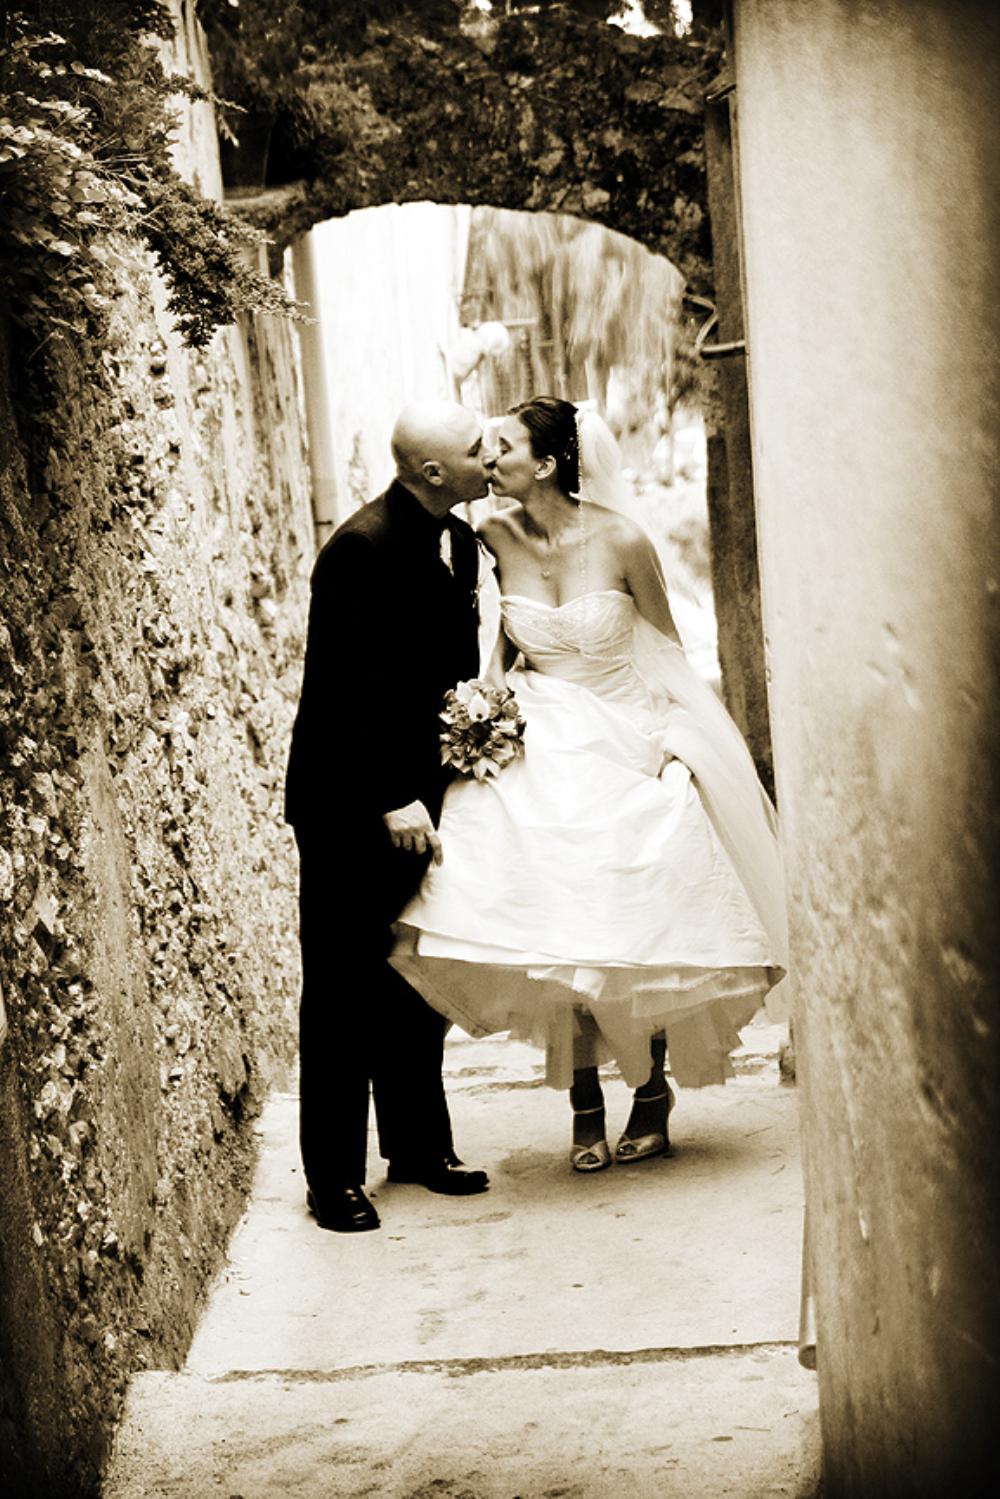 positano, italy wedding and capri TTD by nathaniel thompson photography